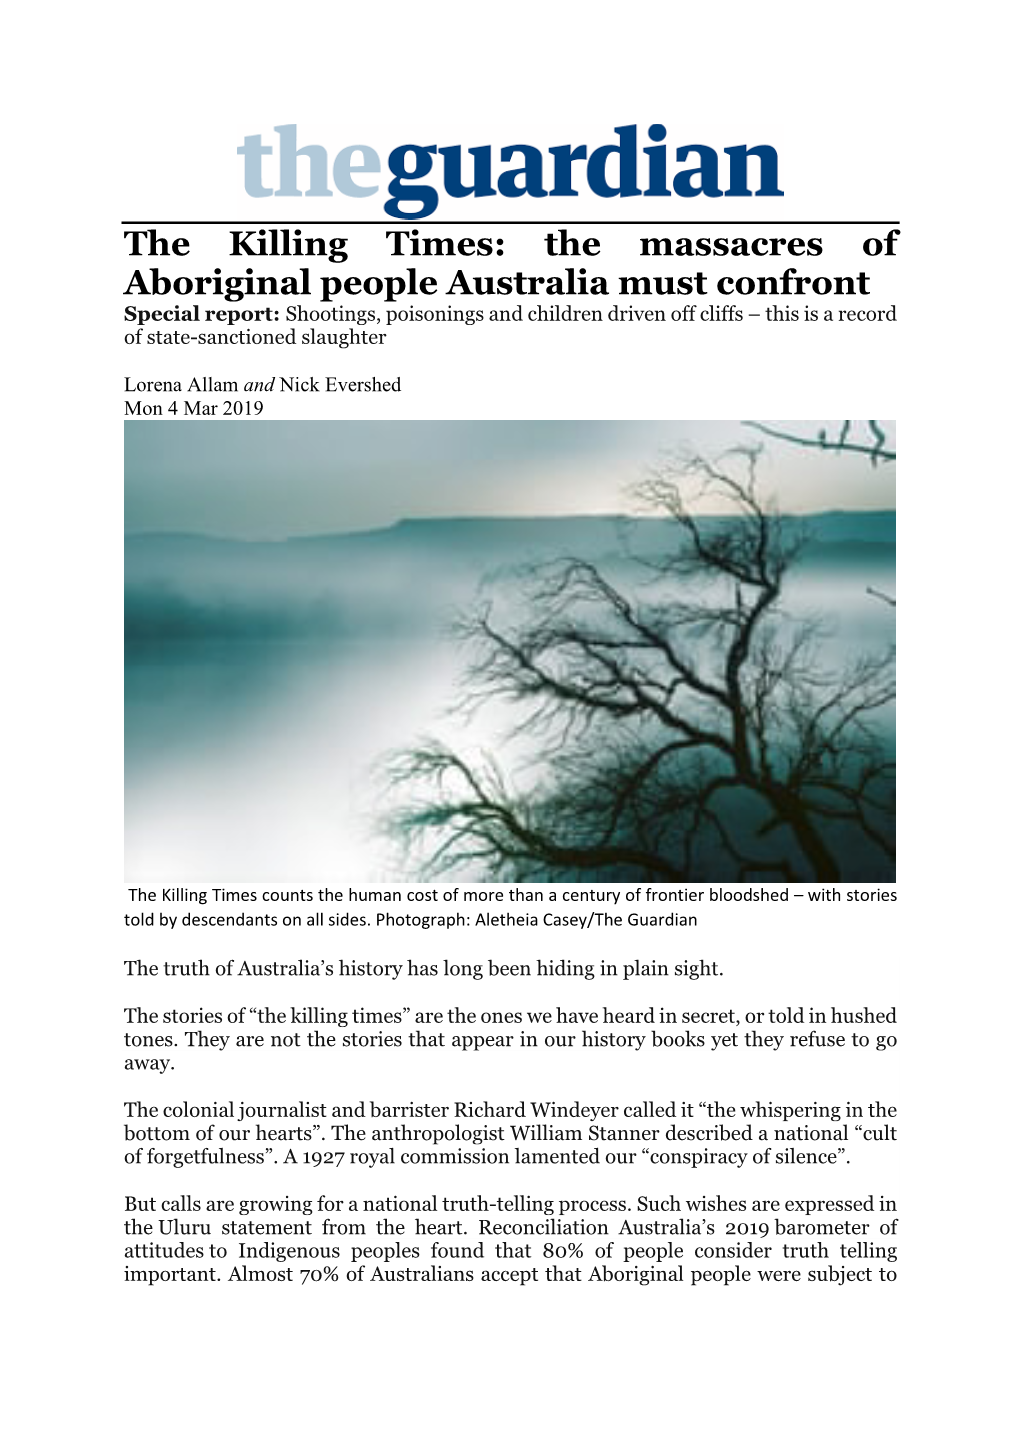 The Killing Times: the Massacres of Aboriginal People Australia Must